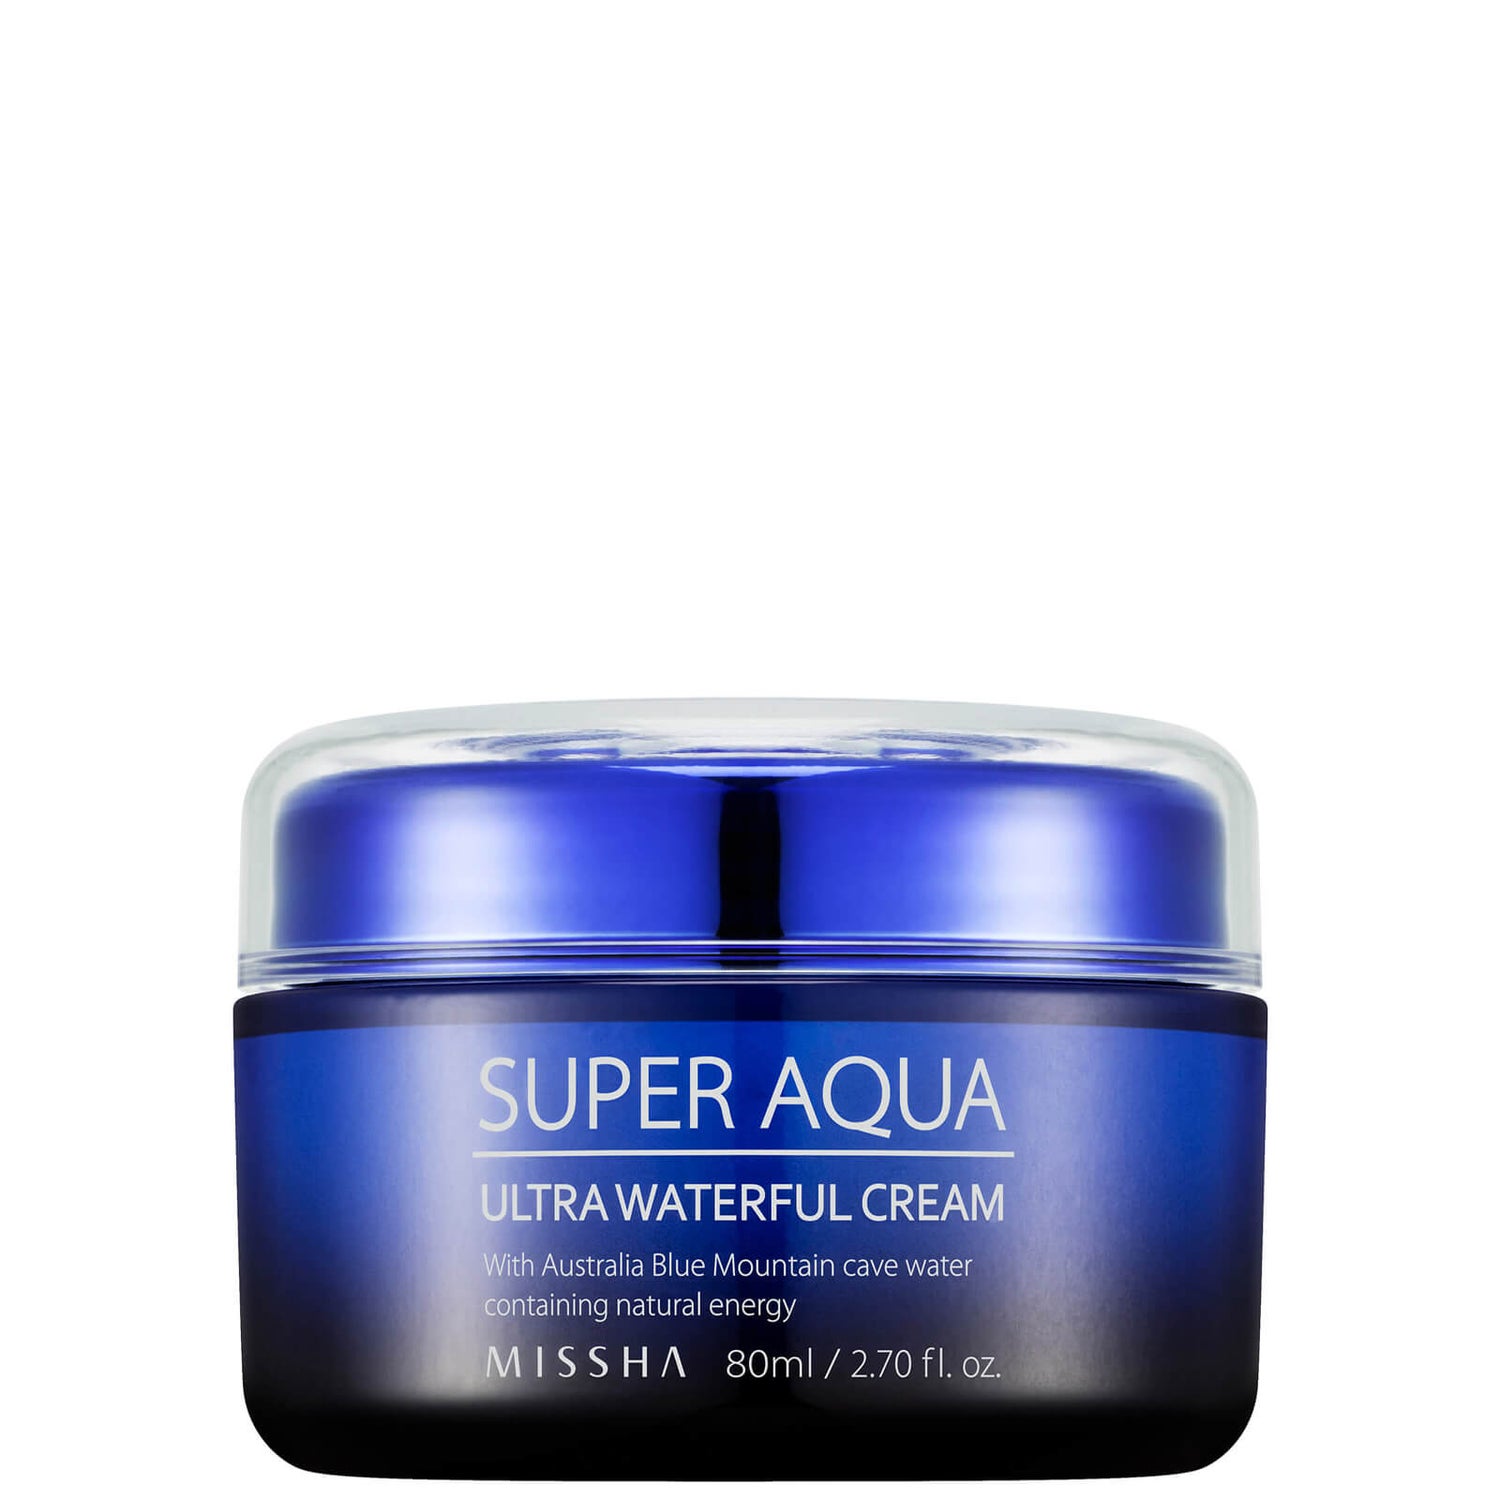 MISSHA Super Aqua Ultra Waterful Cream 80ml